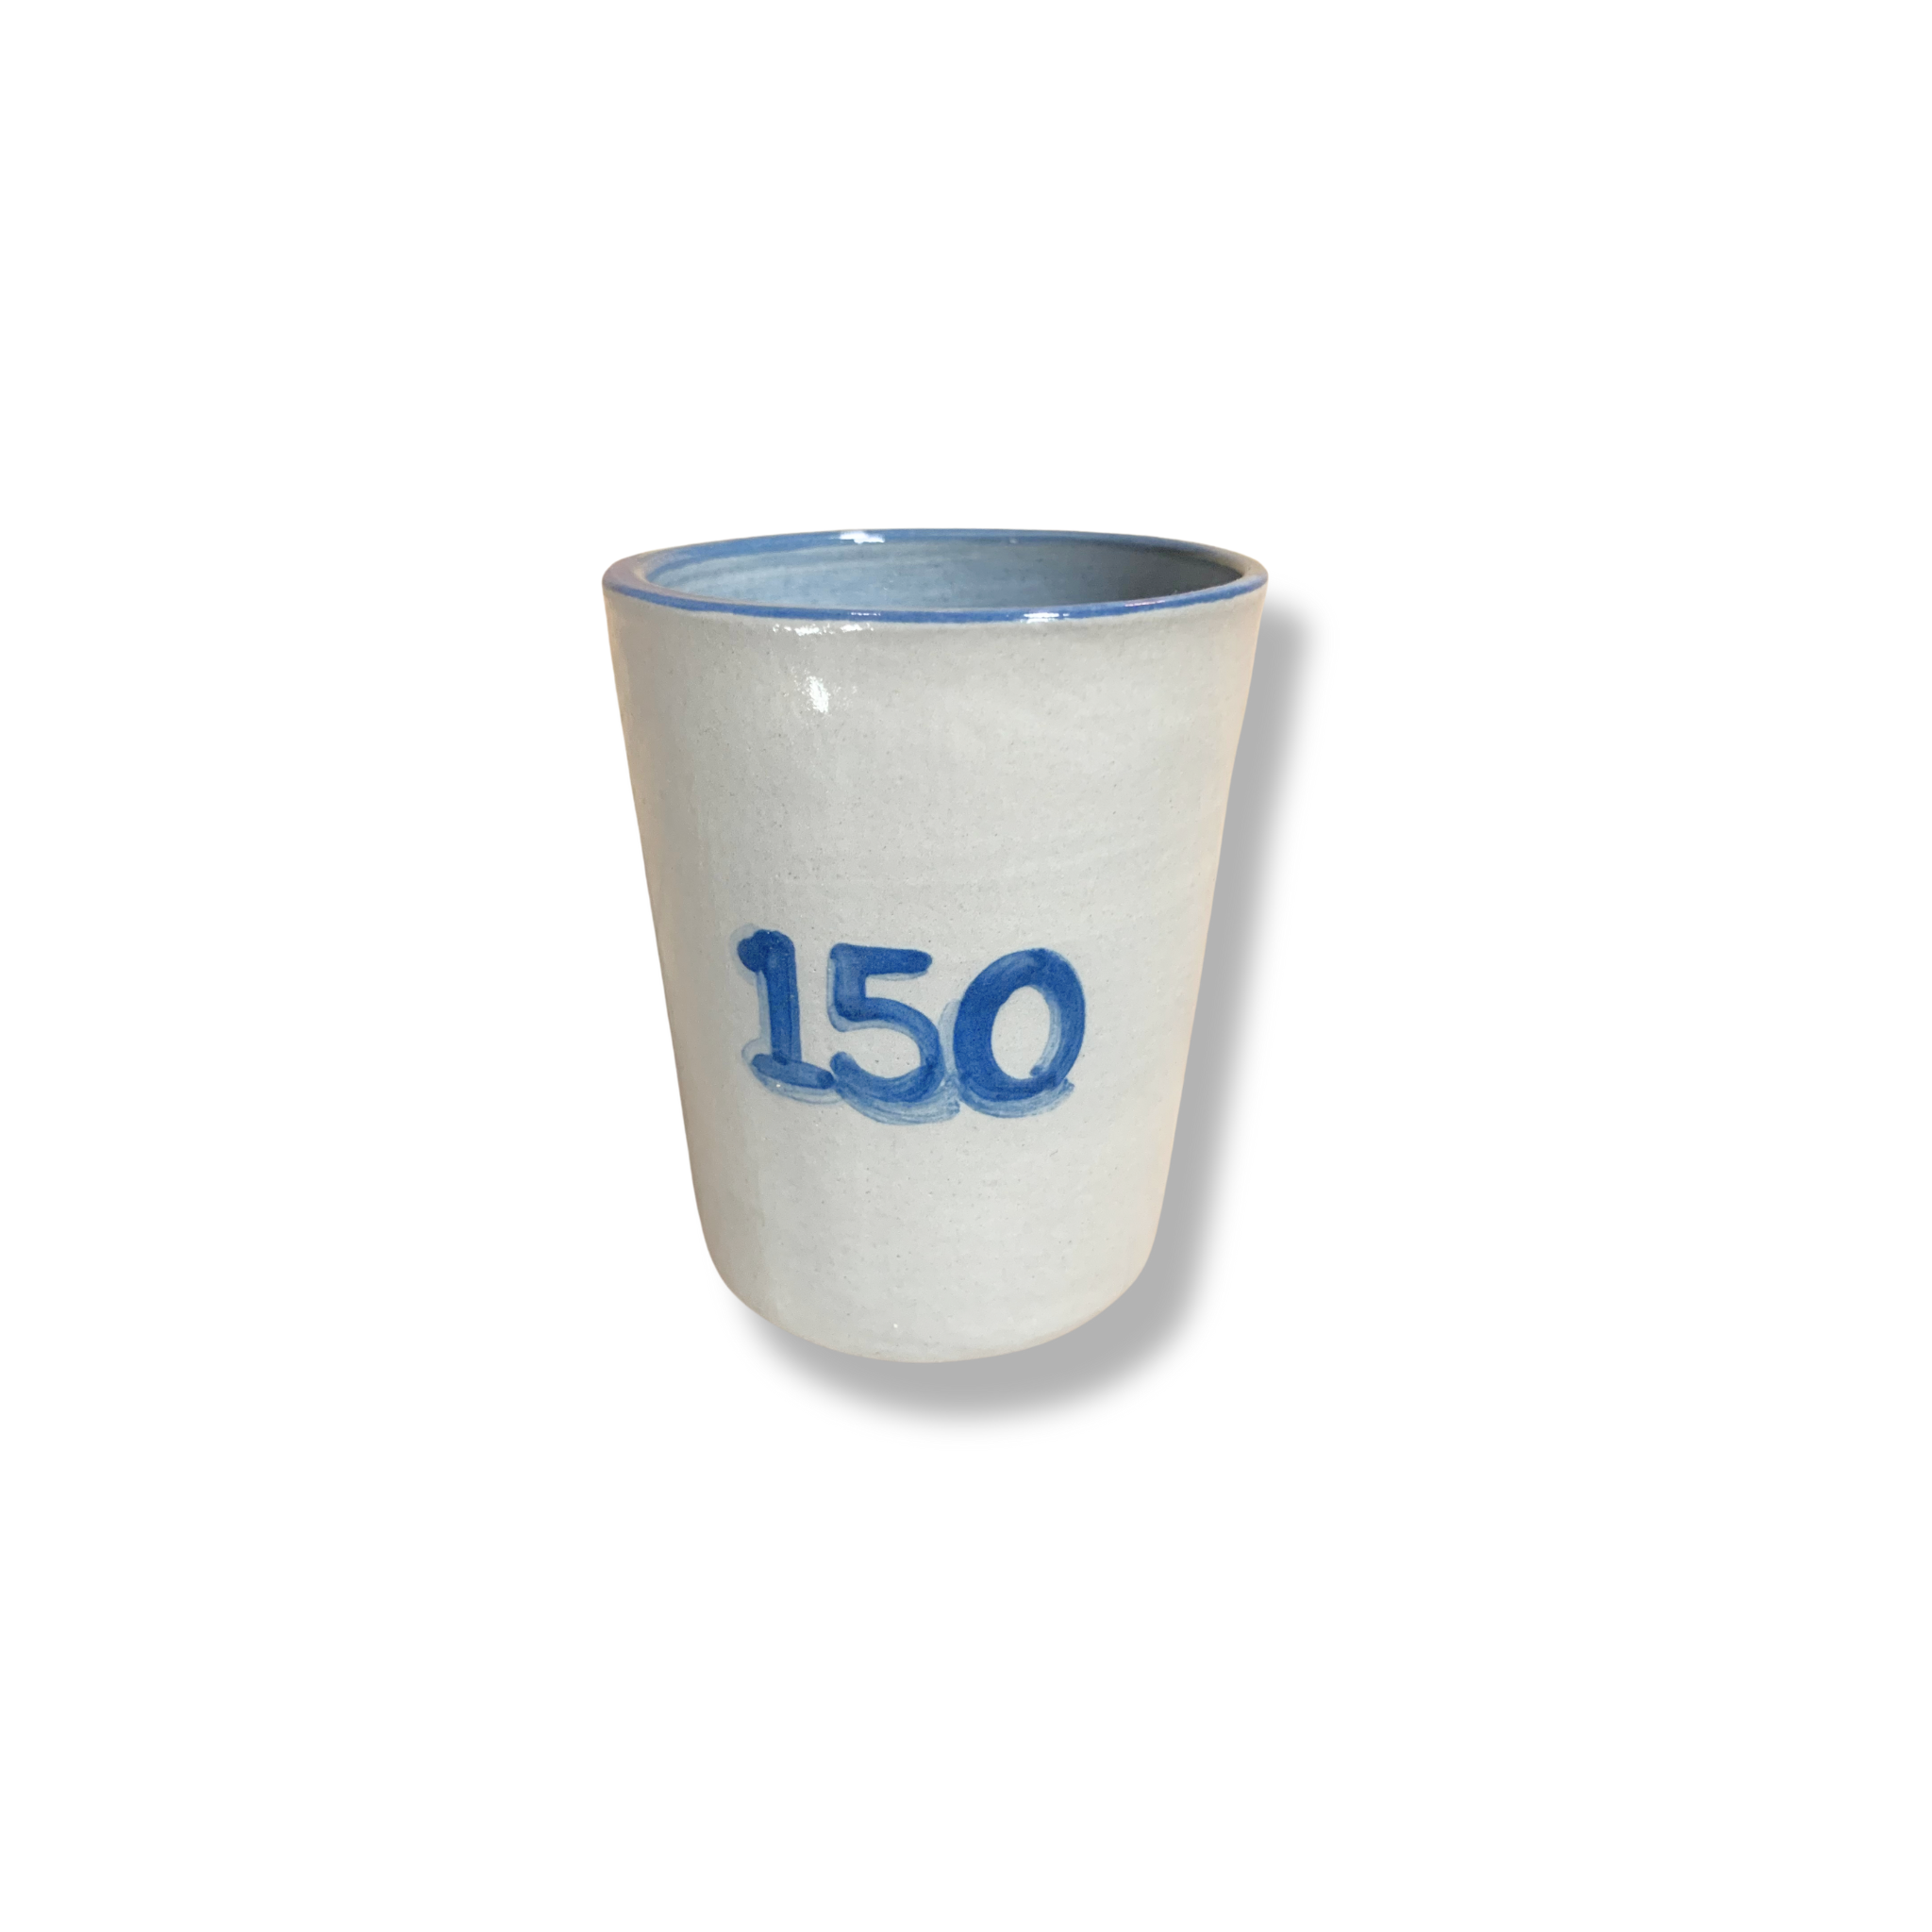 Numbered Julep Cup - Vintage Blue Horse 150